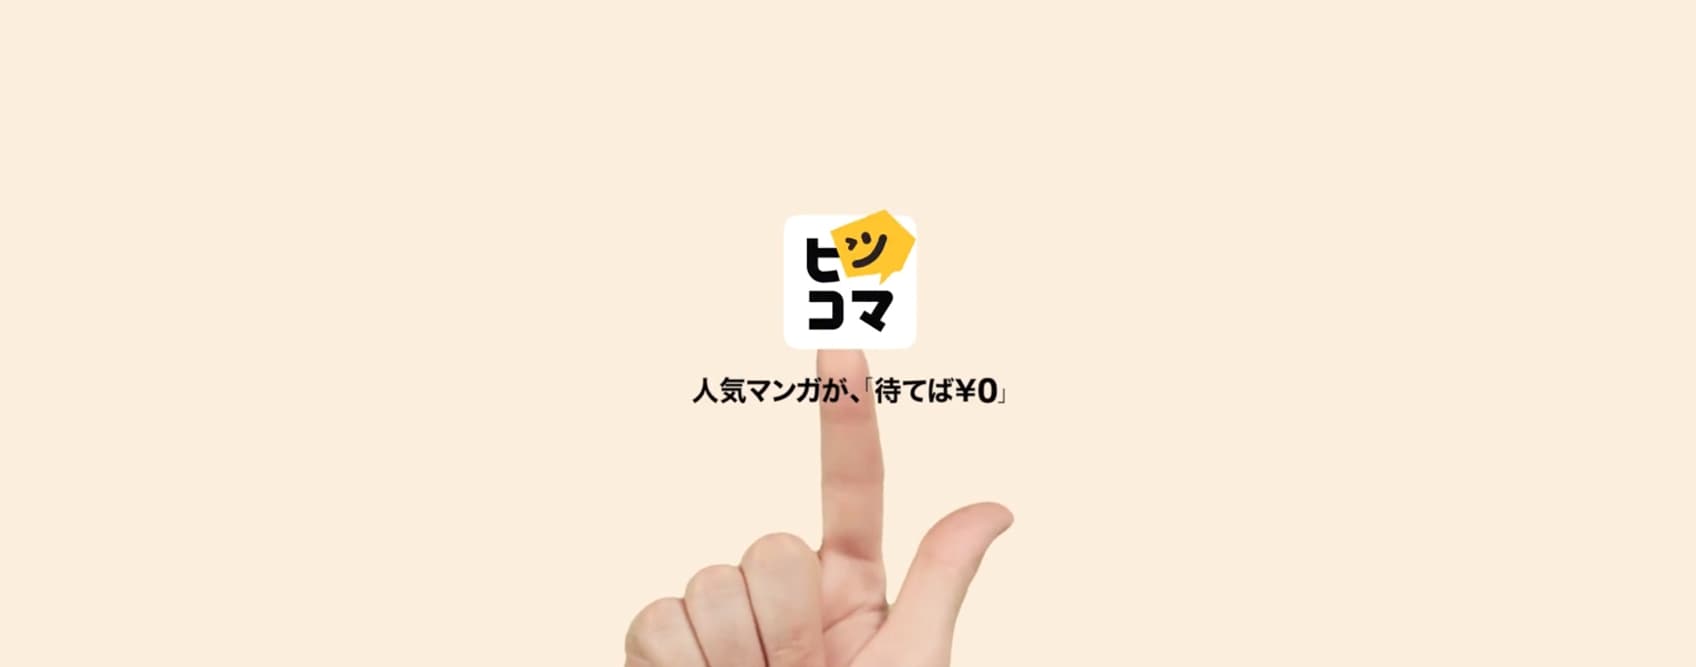 Kakao Japan Piccoma TV Platform